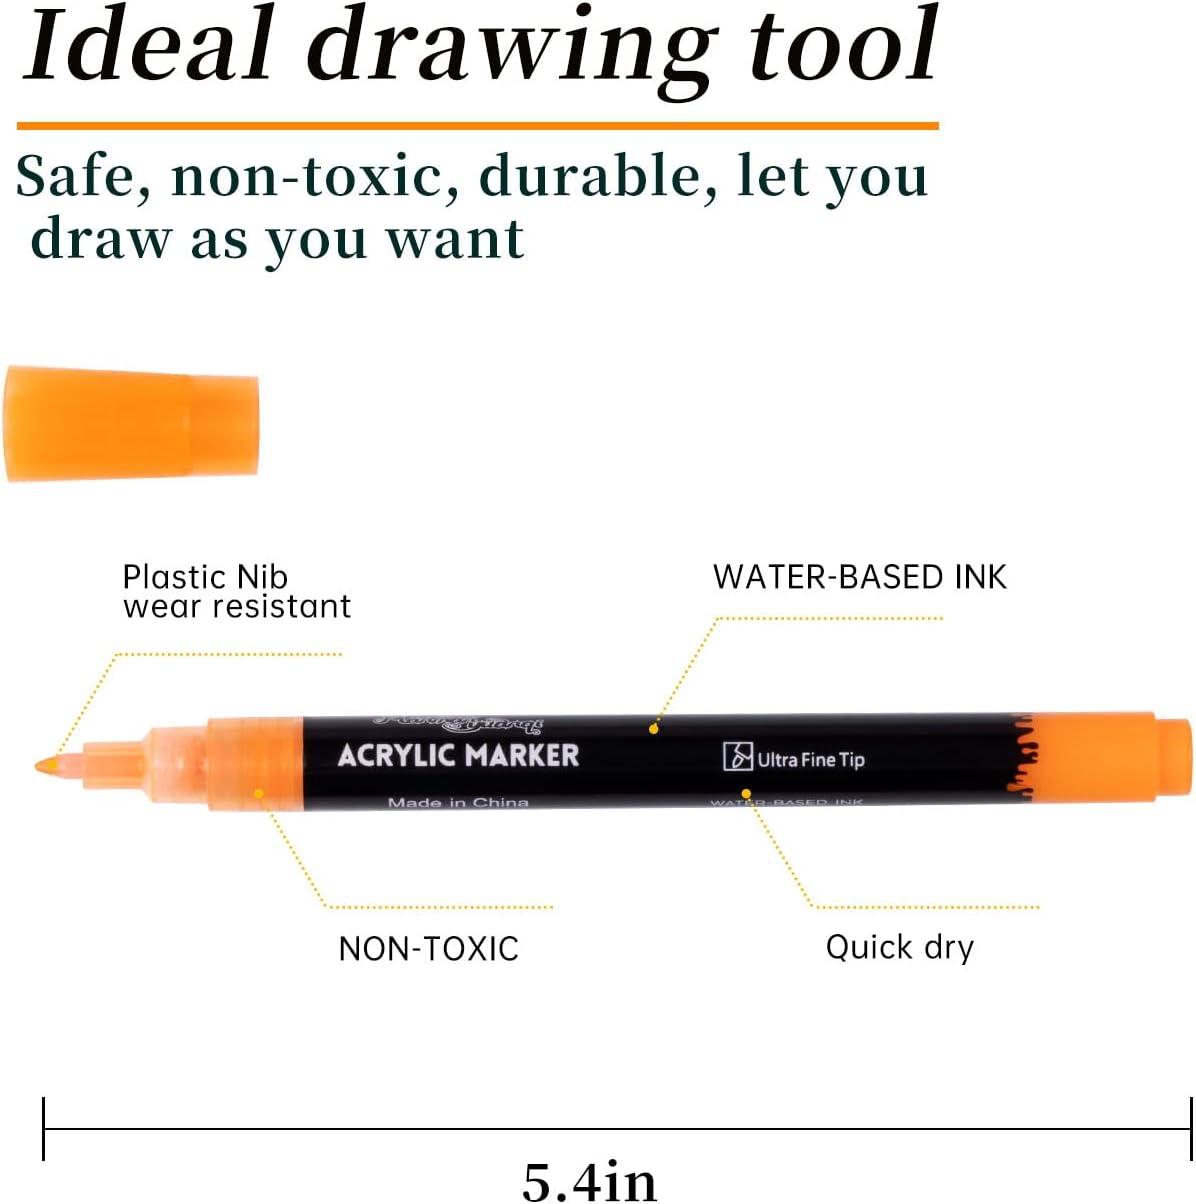 Acrylic Paint Marker Pens Extra Fine Tip Paint Pens for Rock Painting,  Canvas, Ceramic, Card Making, DIY Photo Album (24 colors)